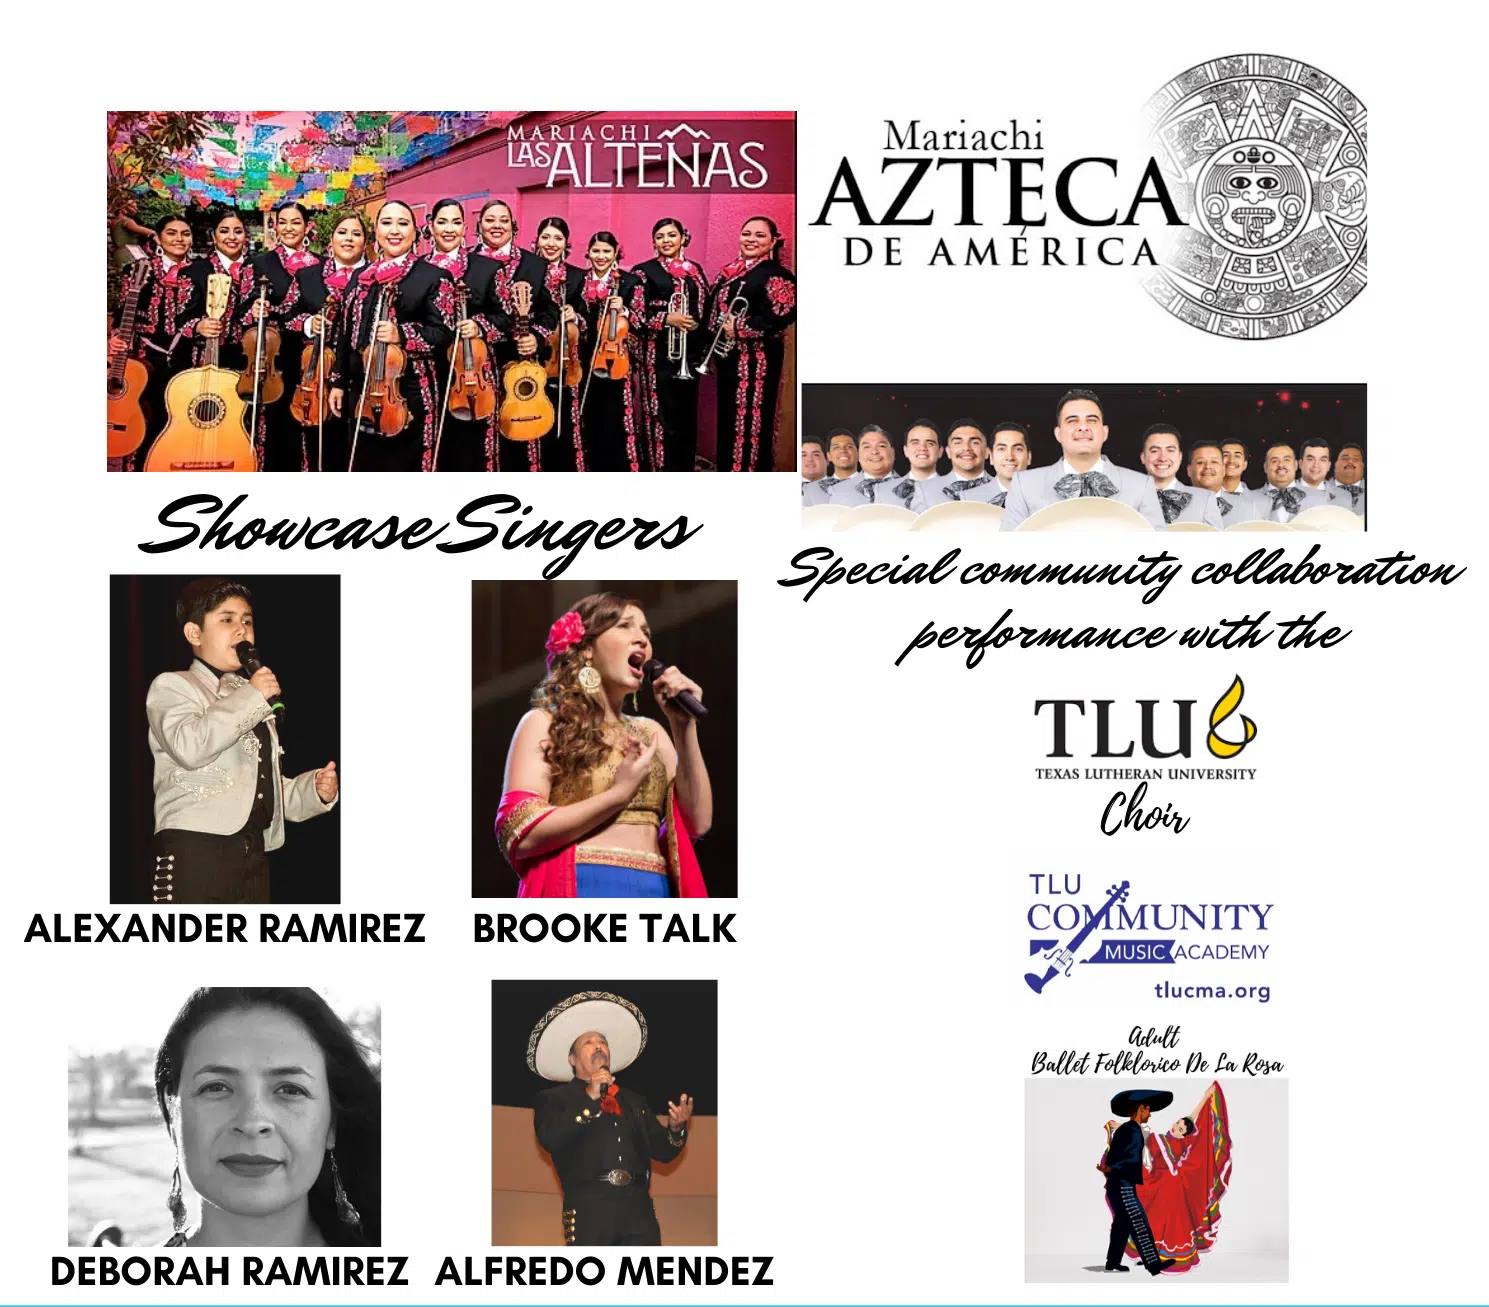 Teatro De Artes to present its 35th Annual Premiere Mariachi Show and Vocalista Competition